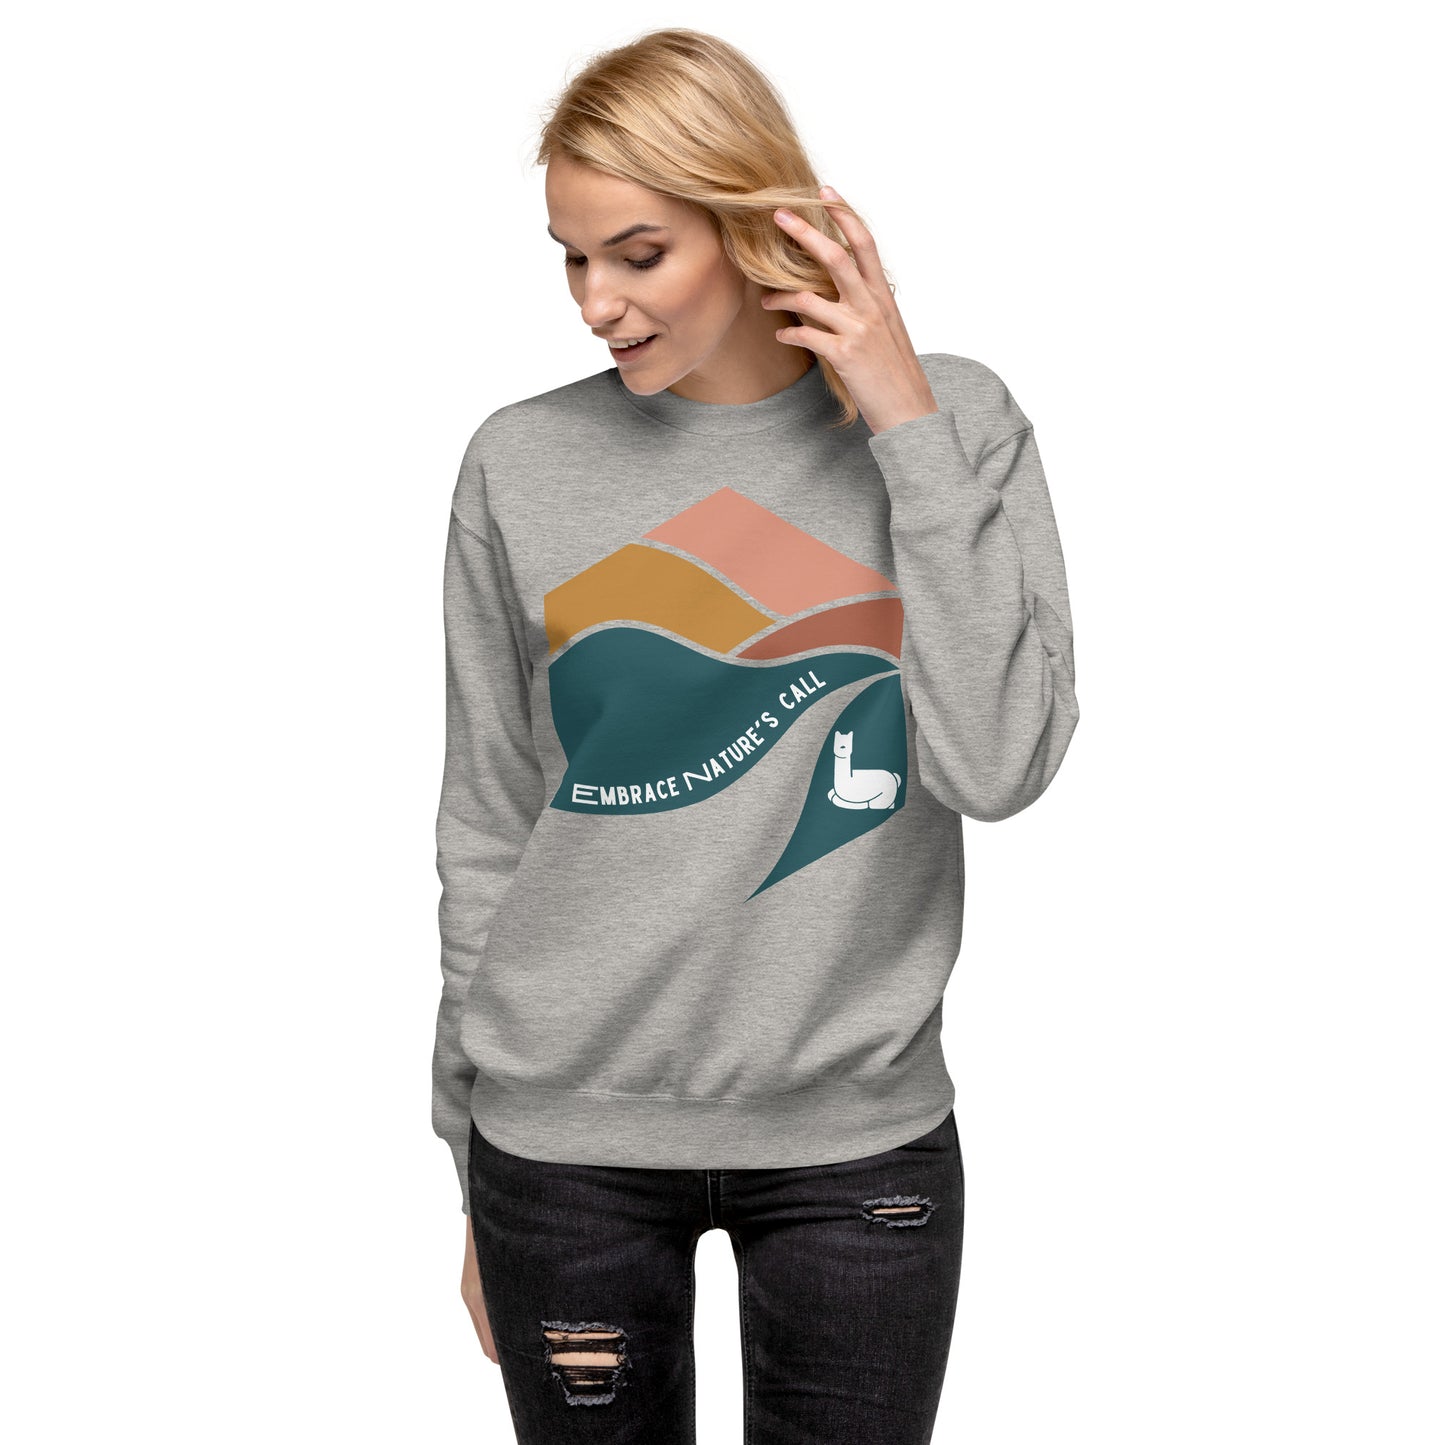 Embrace Nature's Call Unisex Premium Sweatshirt